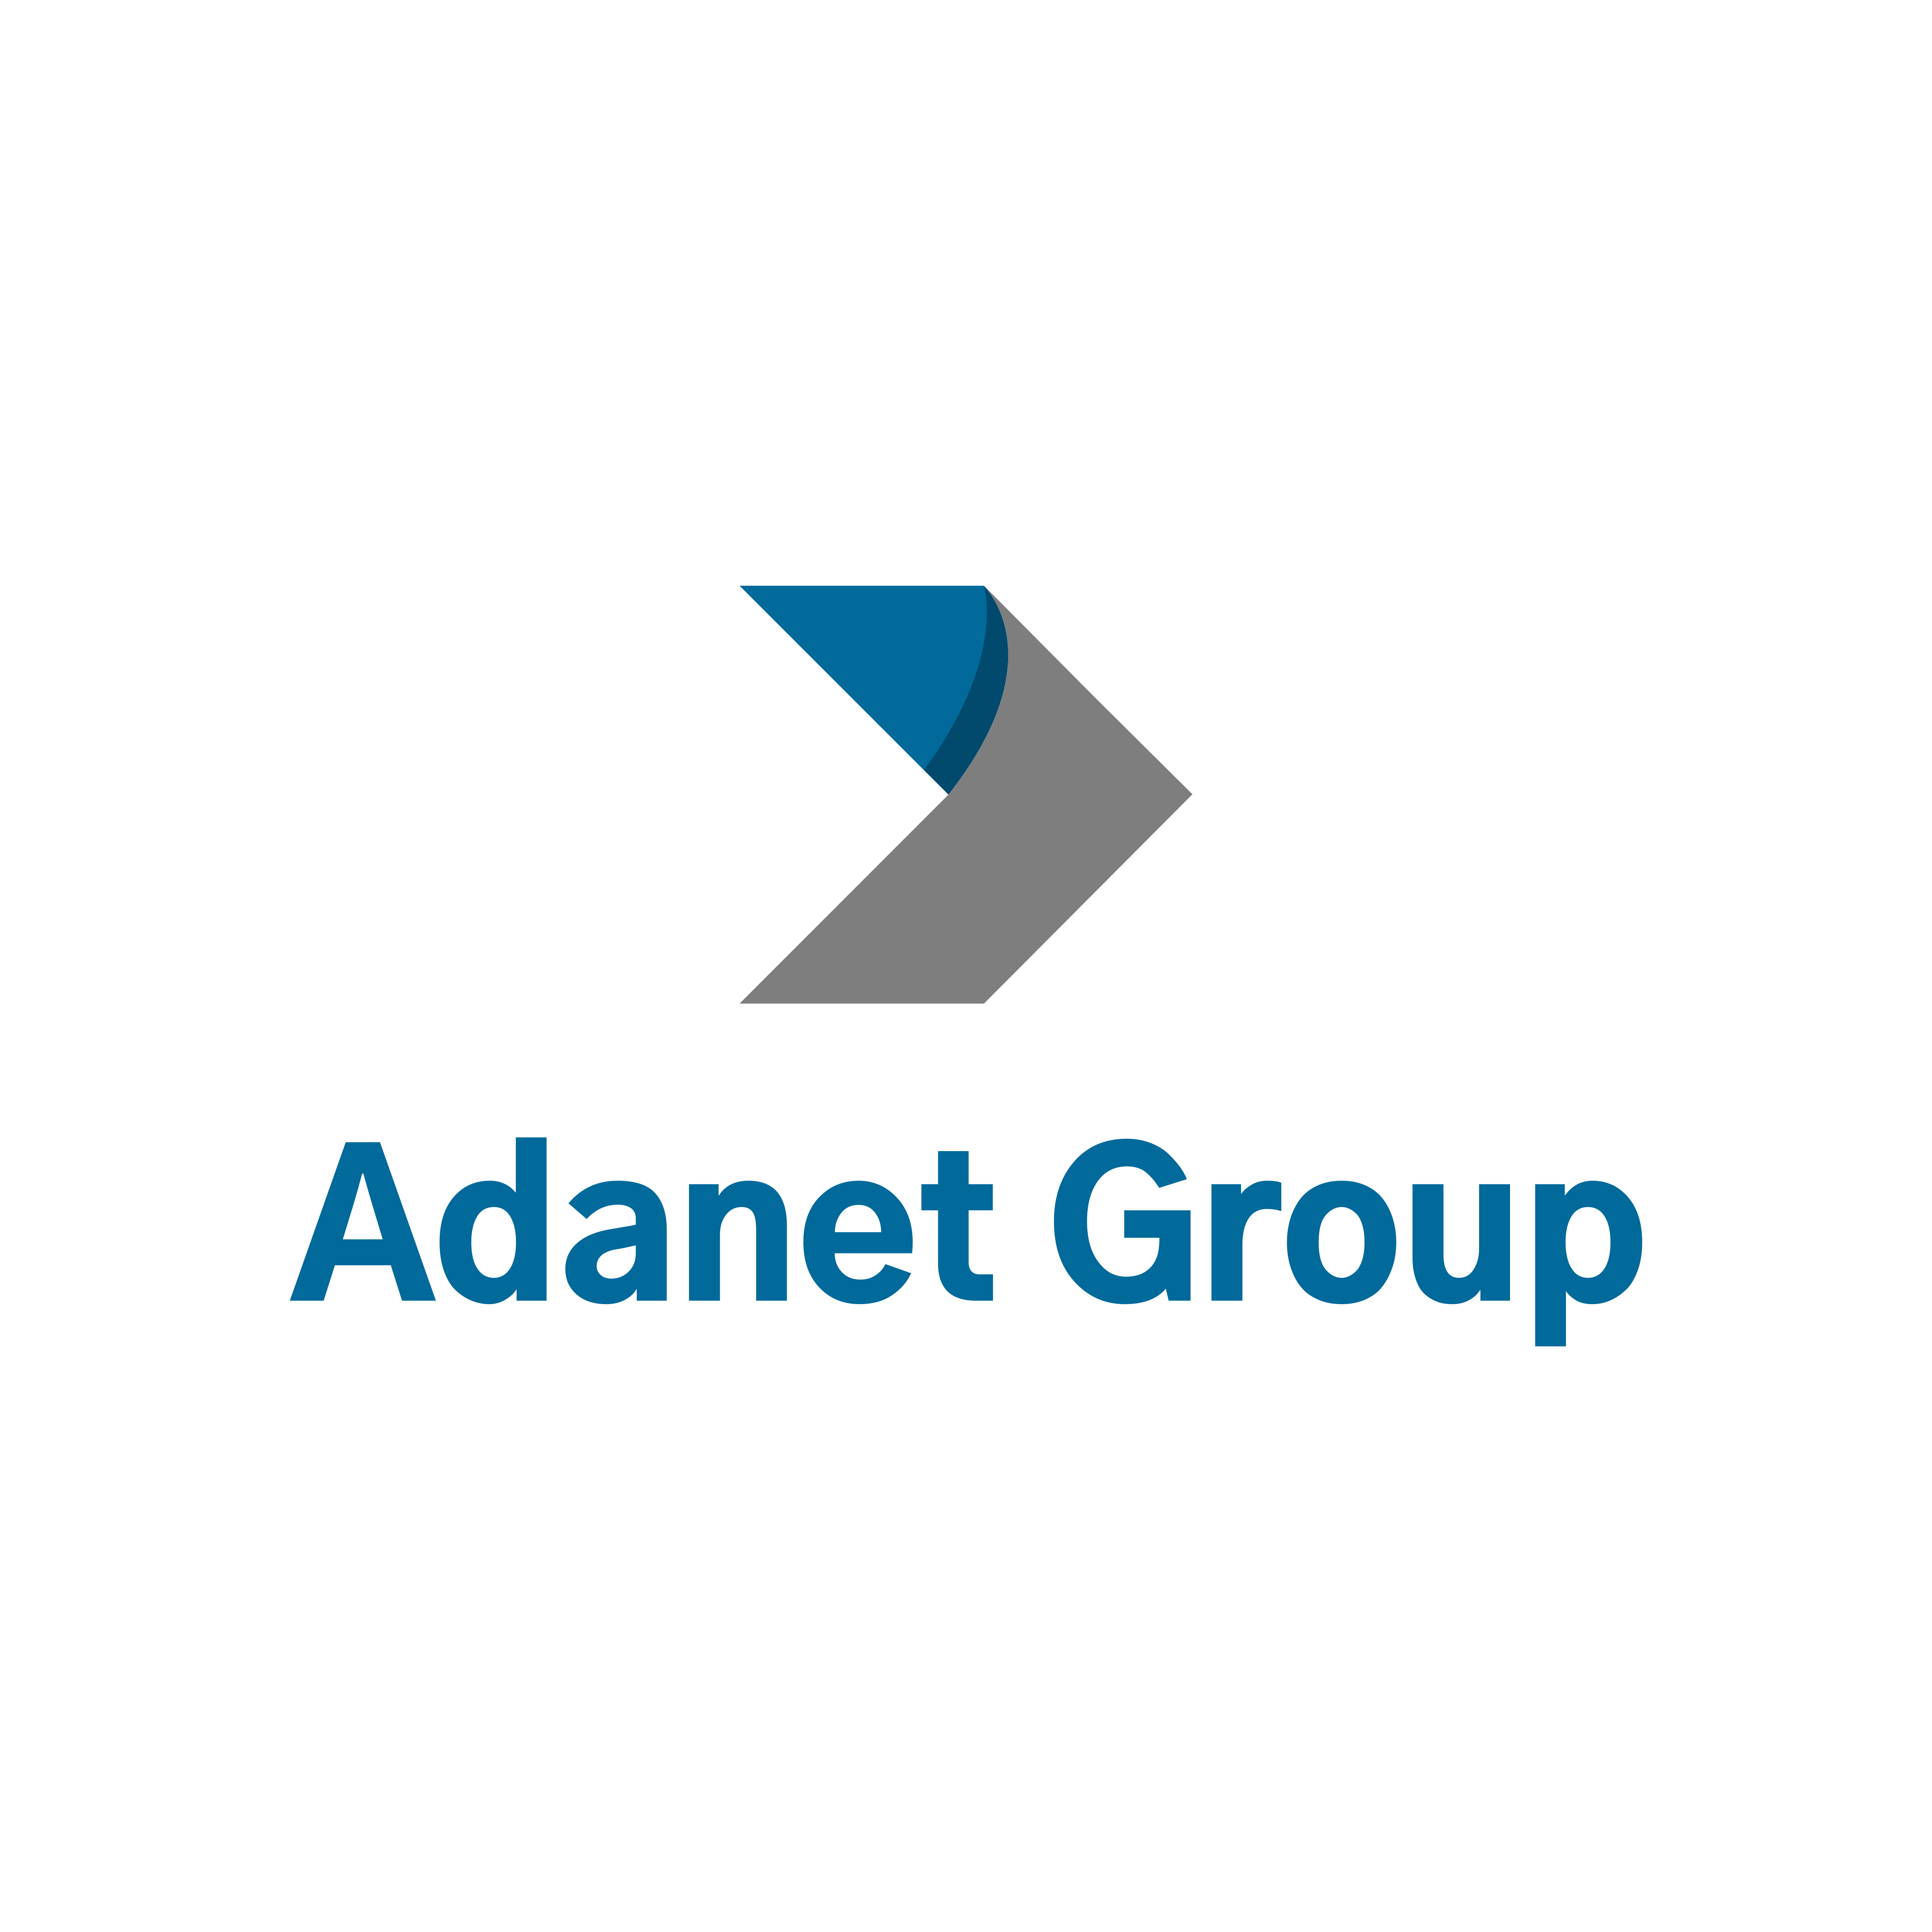 Adanet Group